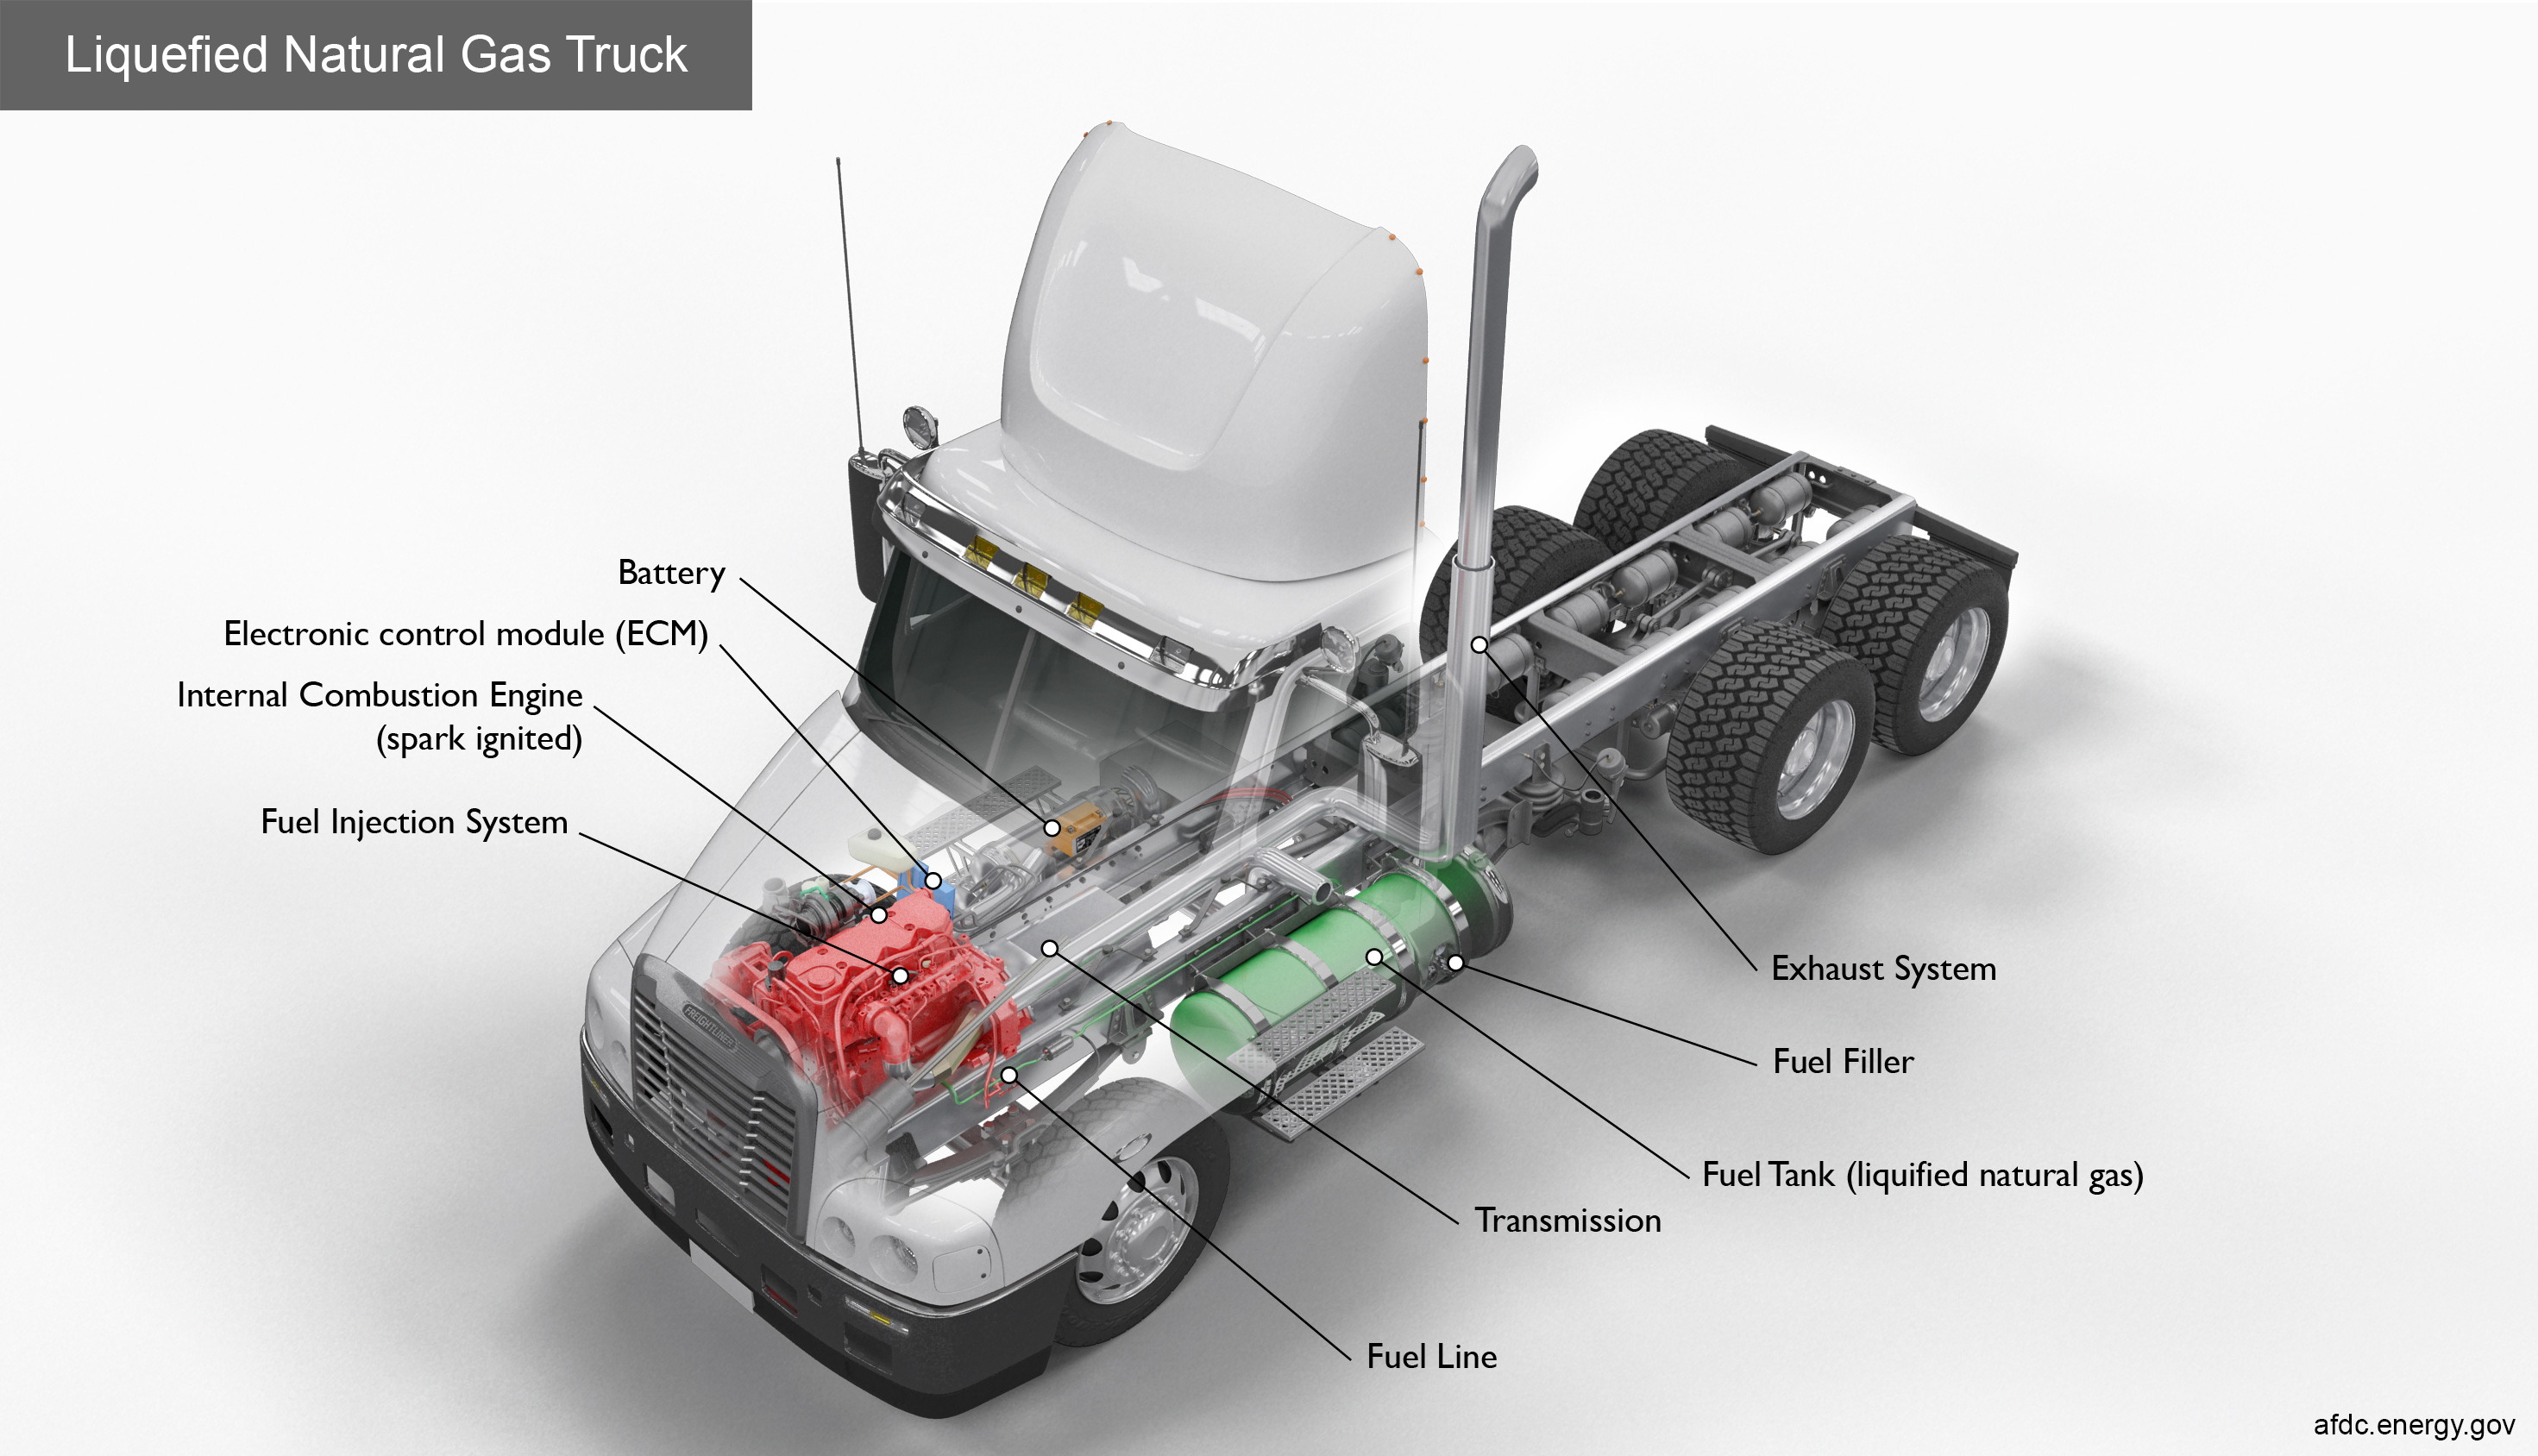 Alternative Fuels Data Center How Do Liquefied Natural Gas Trucks Work?